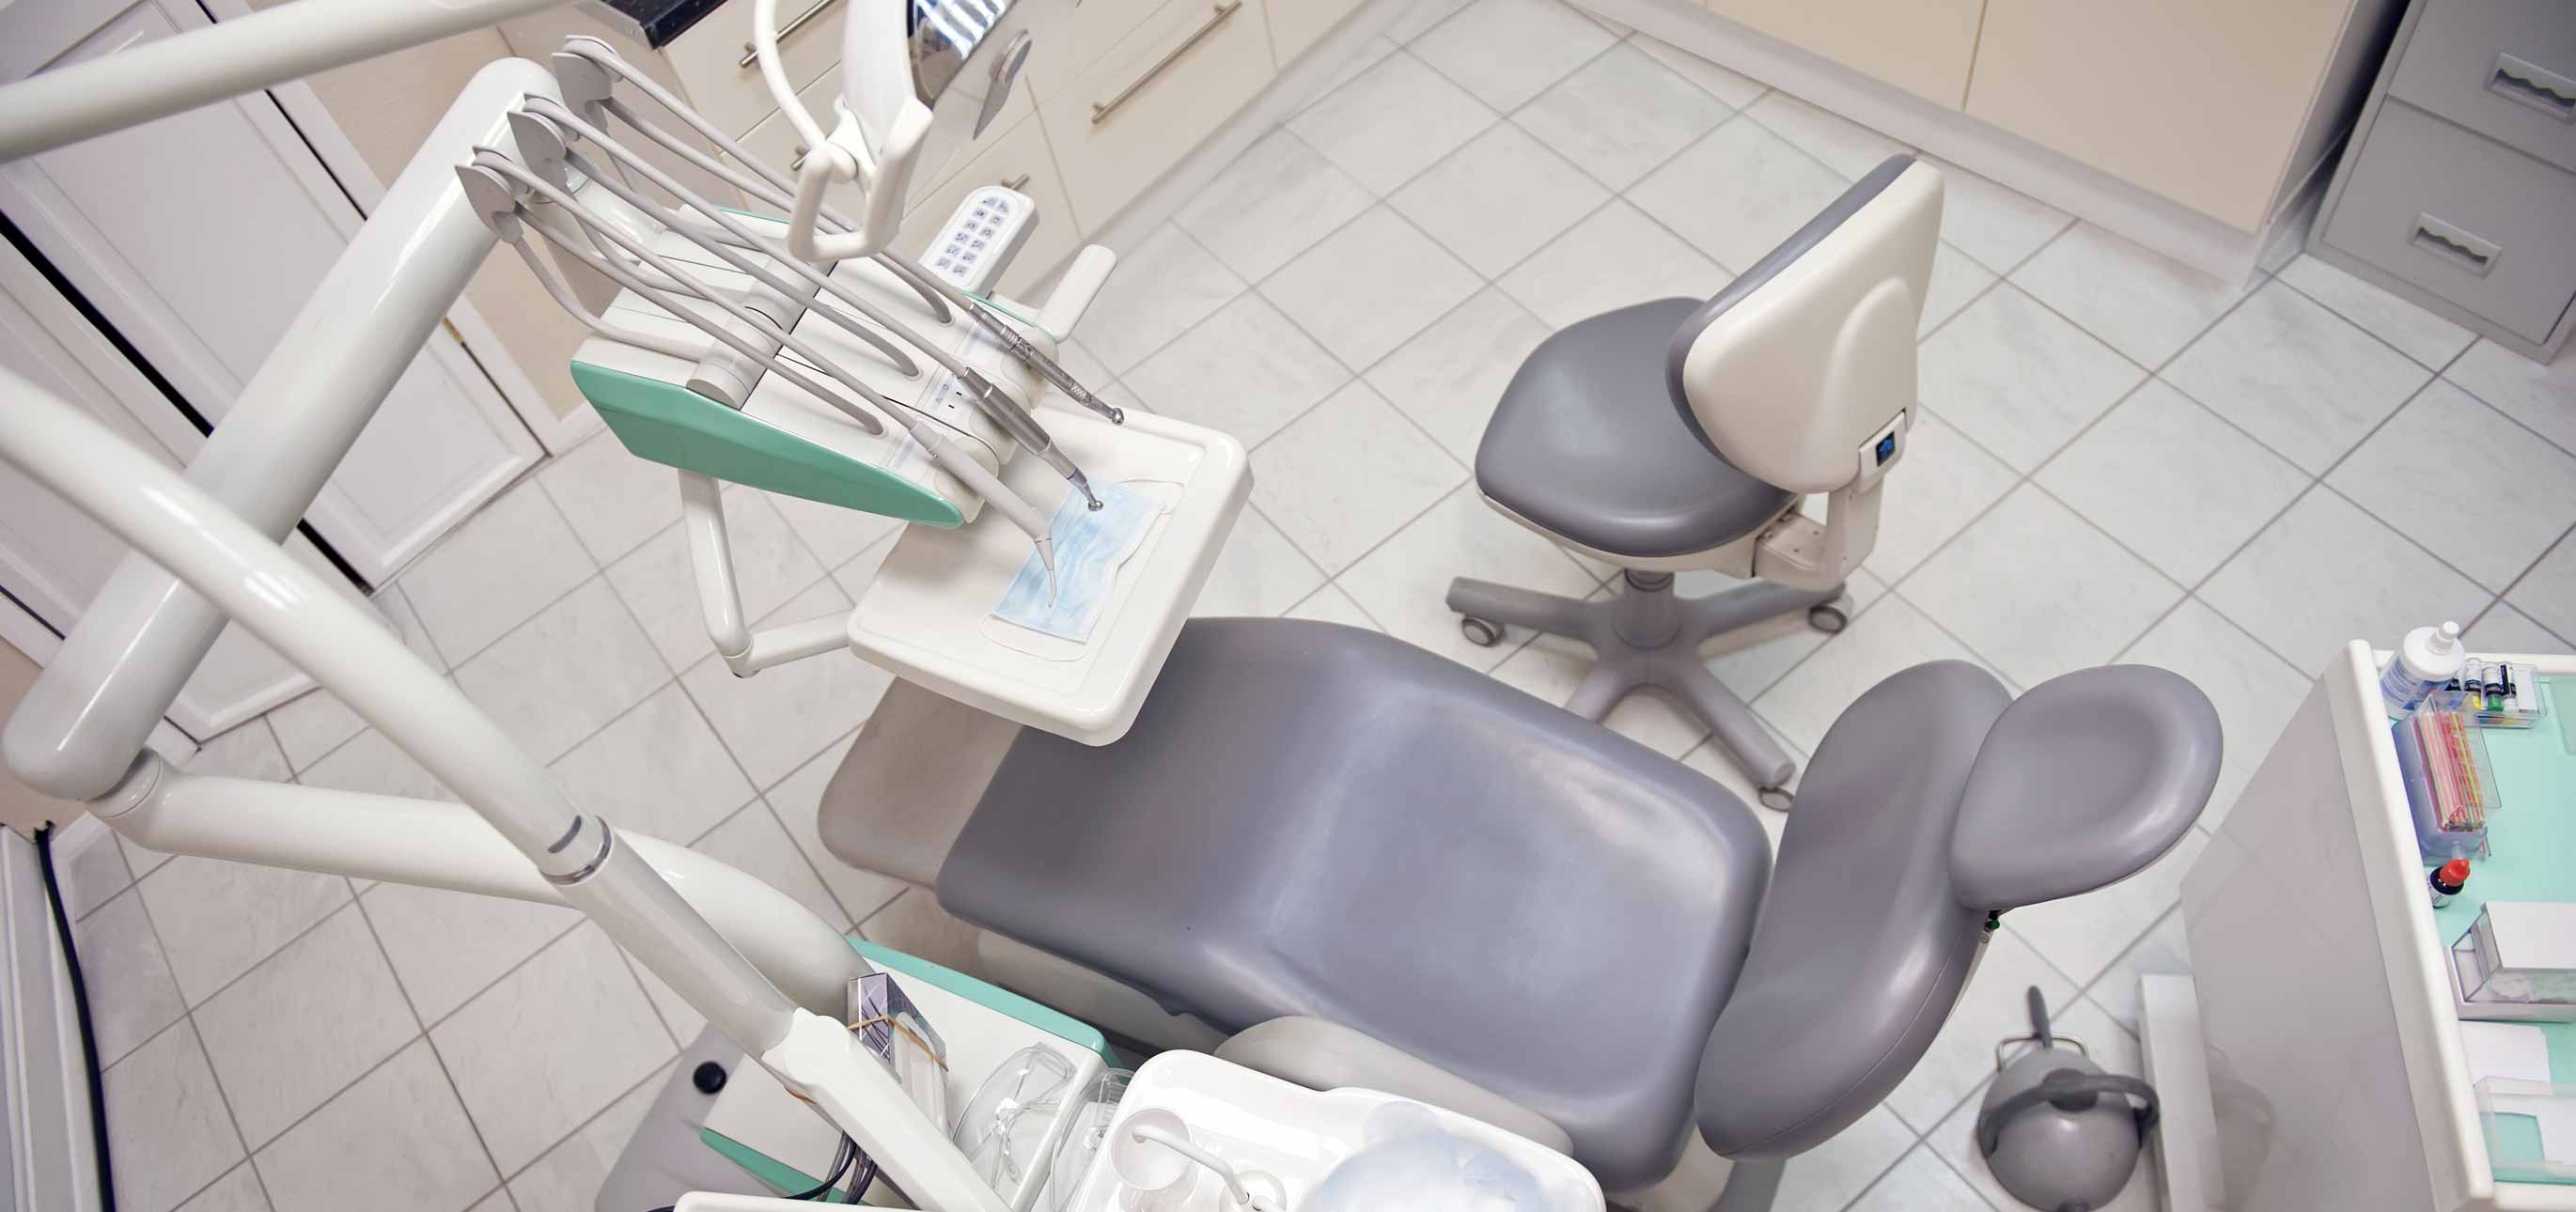 Dental exam room at David A. Olivo, DMD